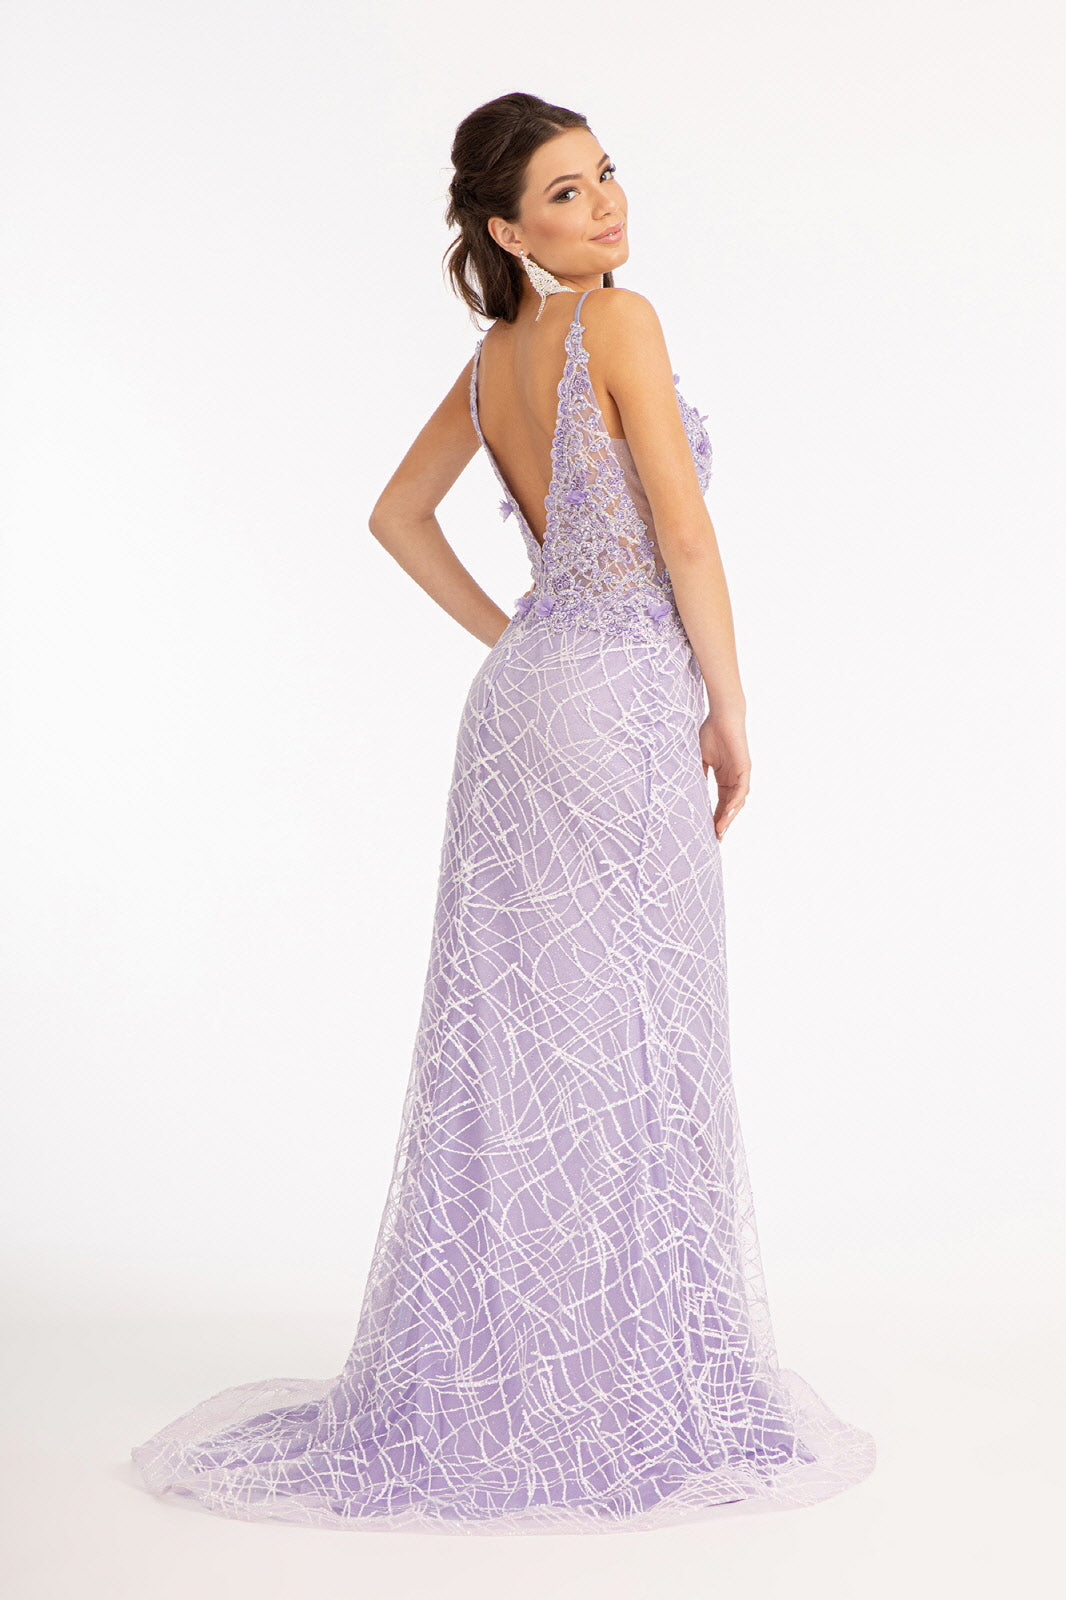 3D Flower Glitter Embellished Mermaid Dress Sheer Sides GLGL3042-PROM-smcfashion.com